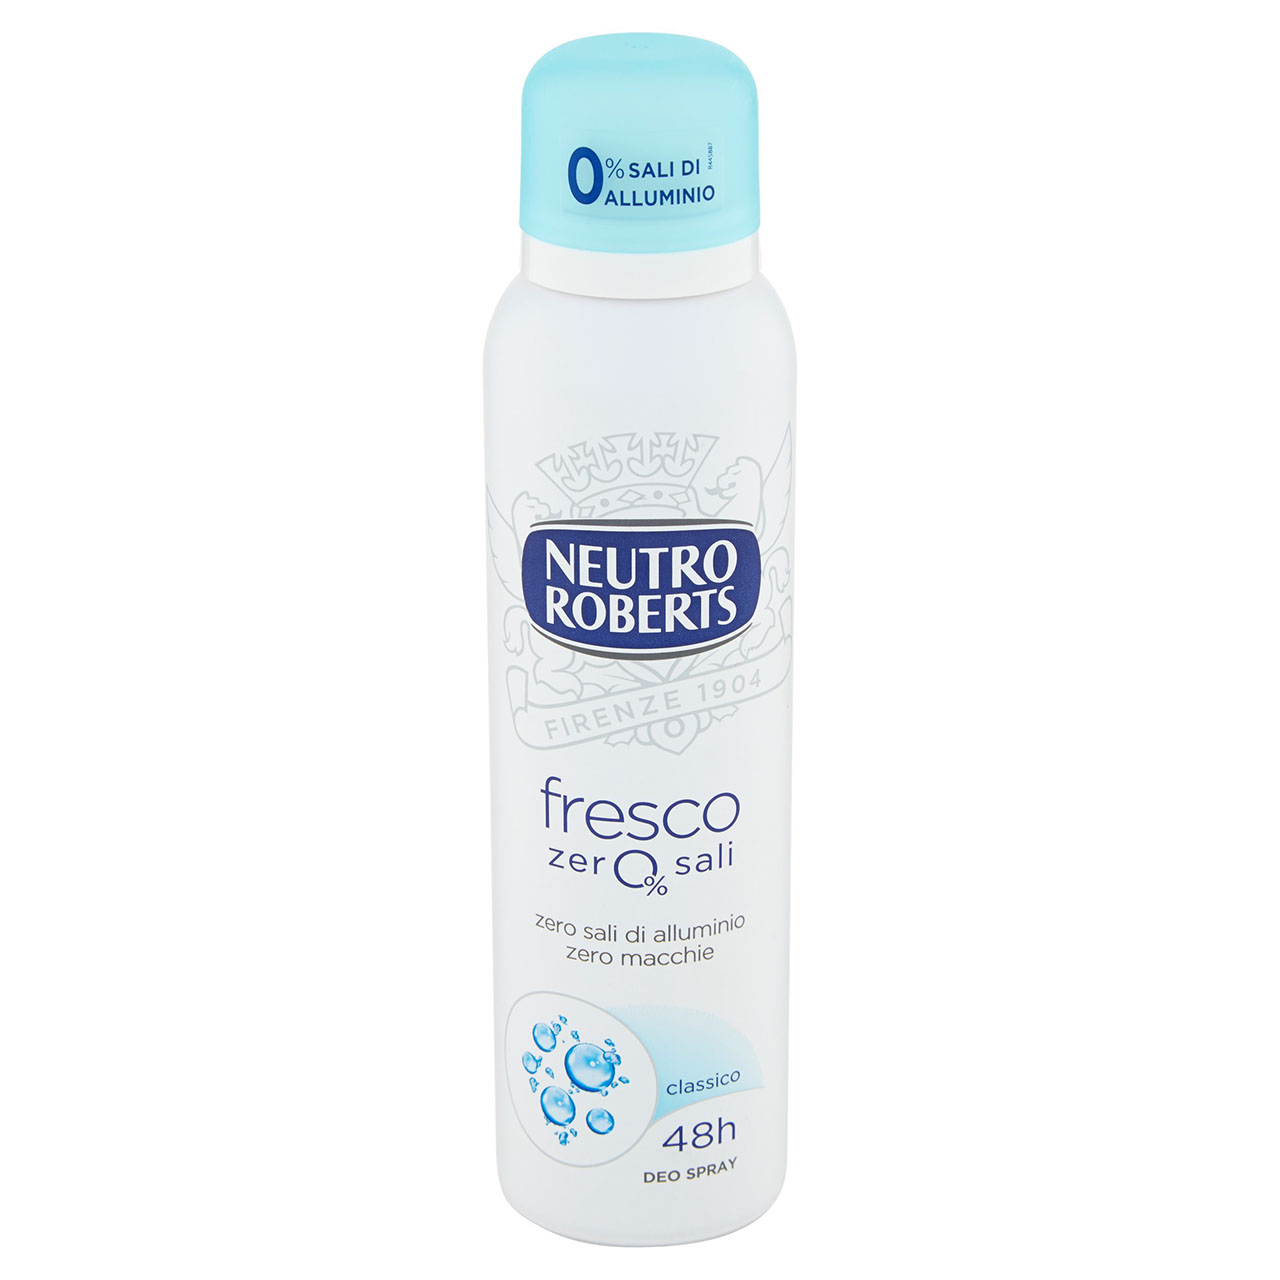 Neutro Roberts fresco zero% sali classico Deo Spray 150 ml